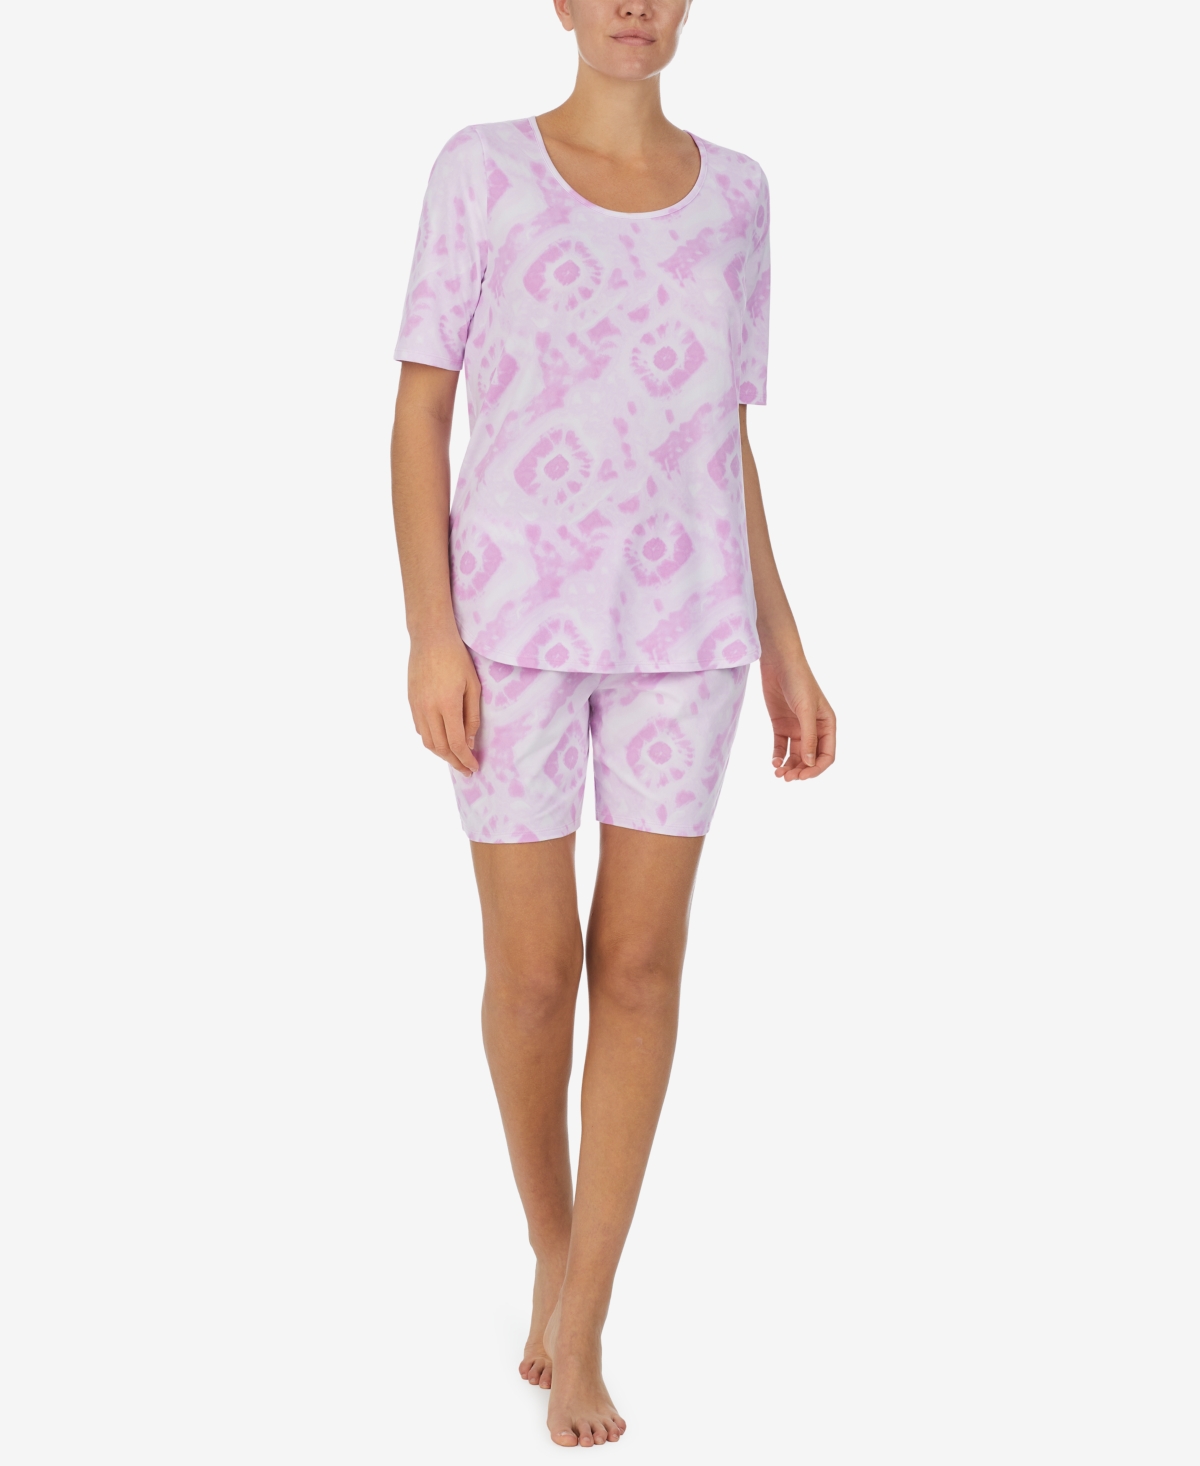 Ellen Tracy Women's Bermuda Pajama Set, Set of 2